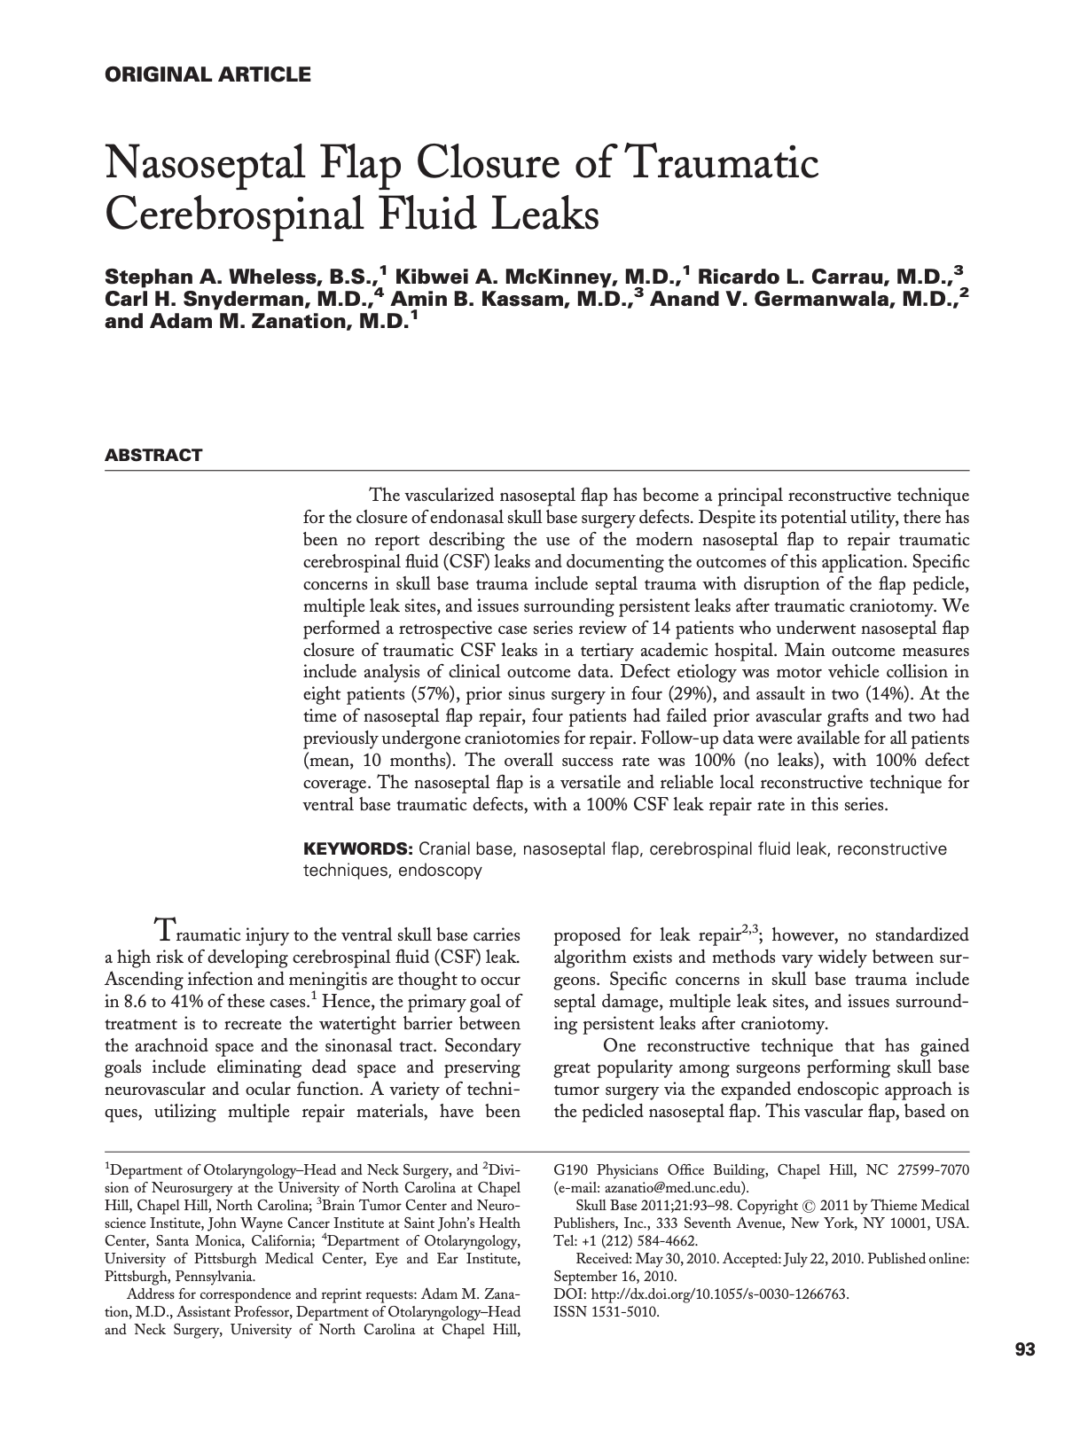 Nasoseptal Flap Closure of Traumatic Cerebrospinal Fluid Leaks